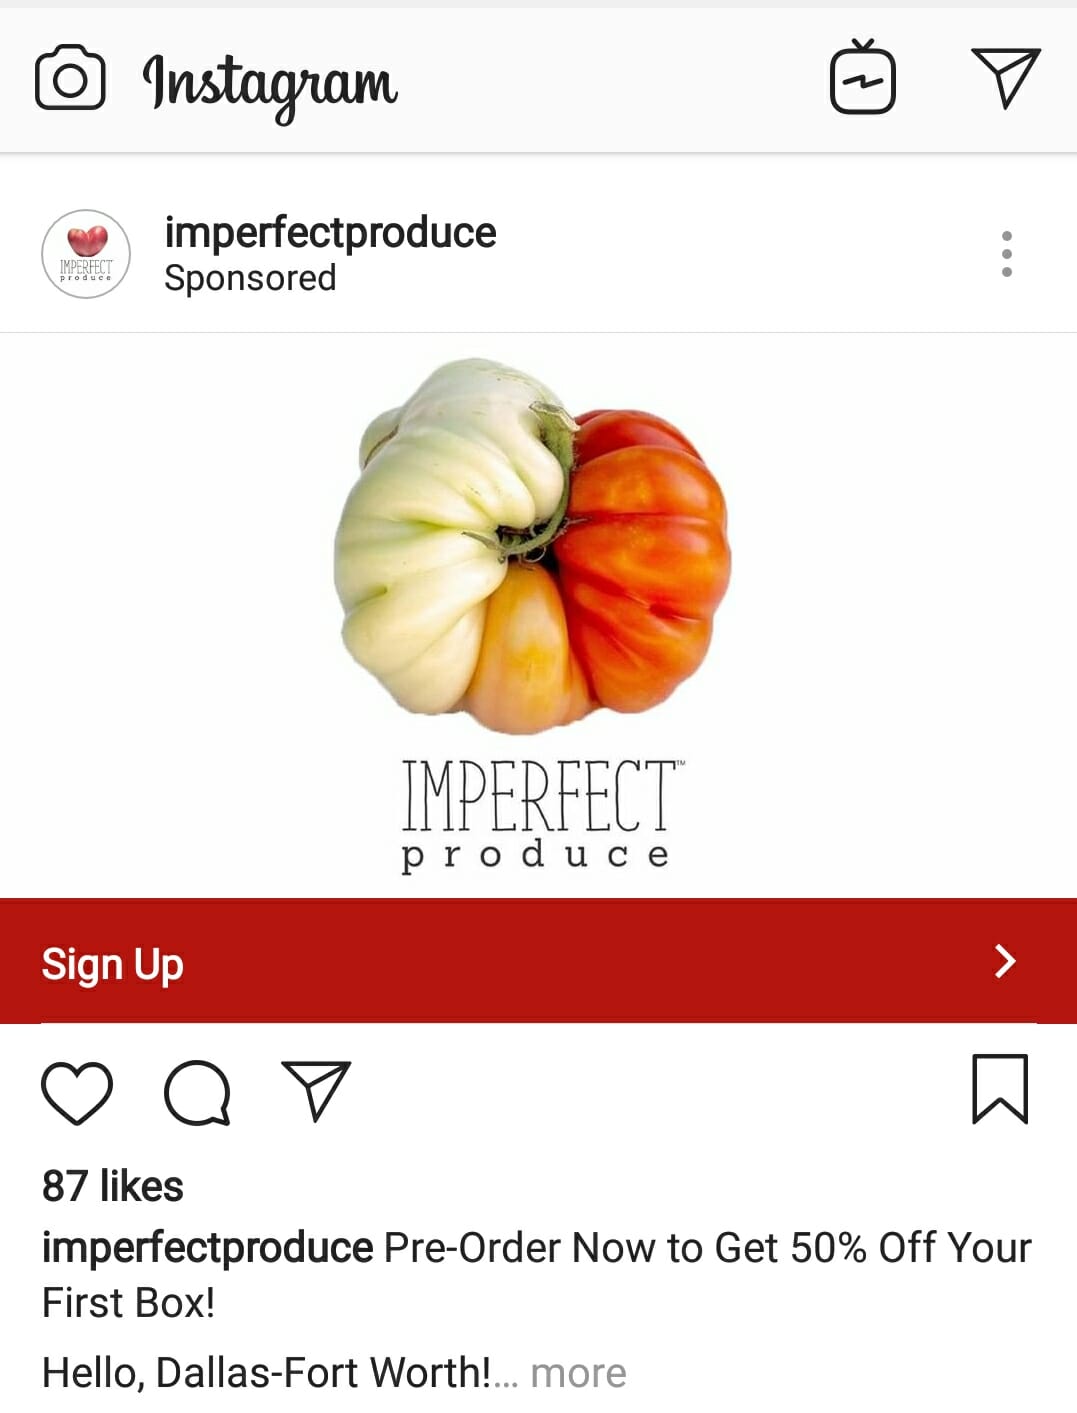 Instagram post ad